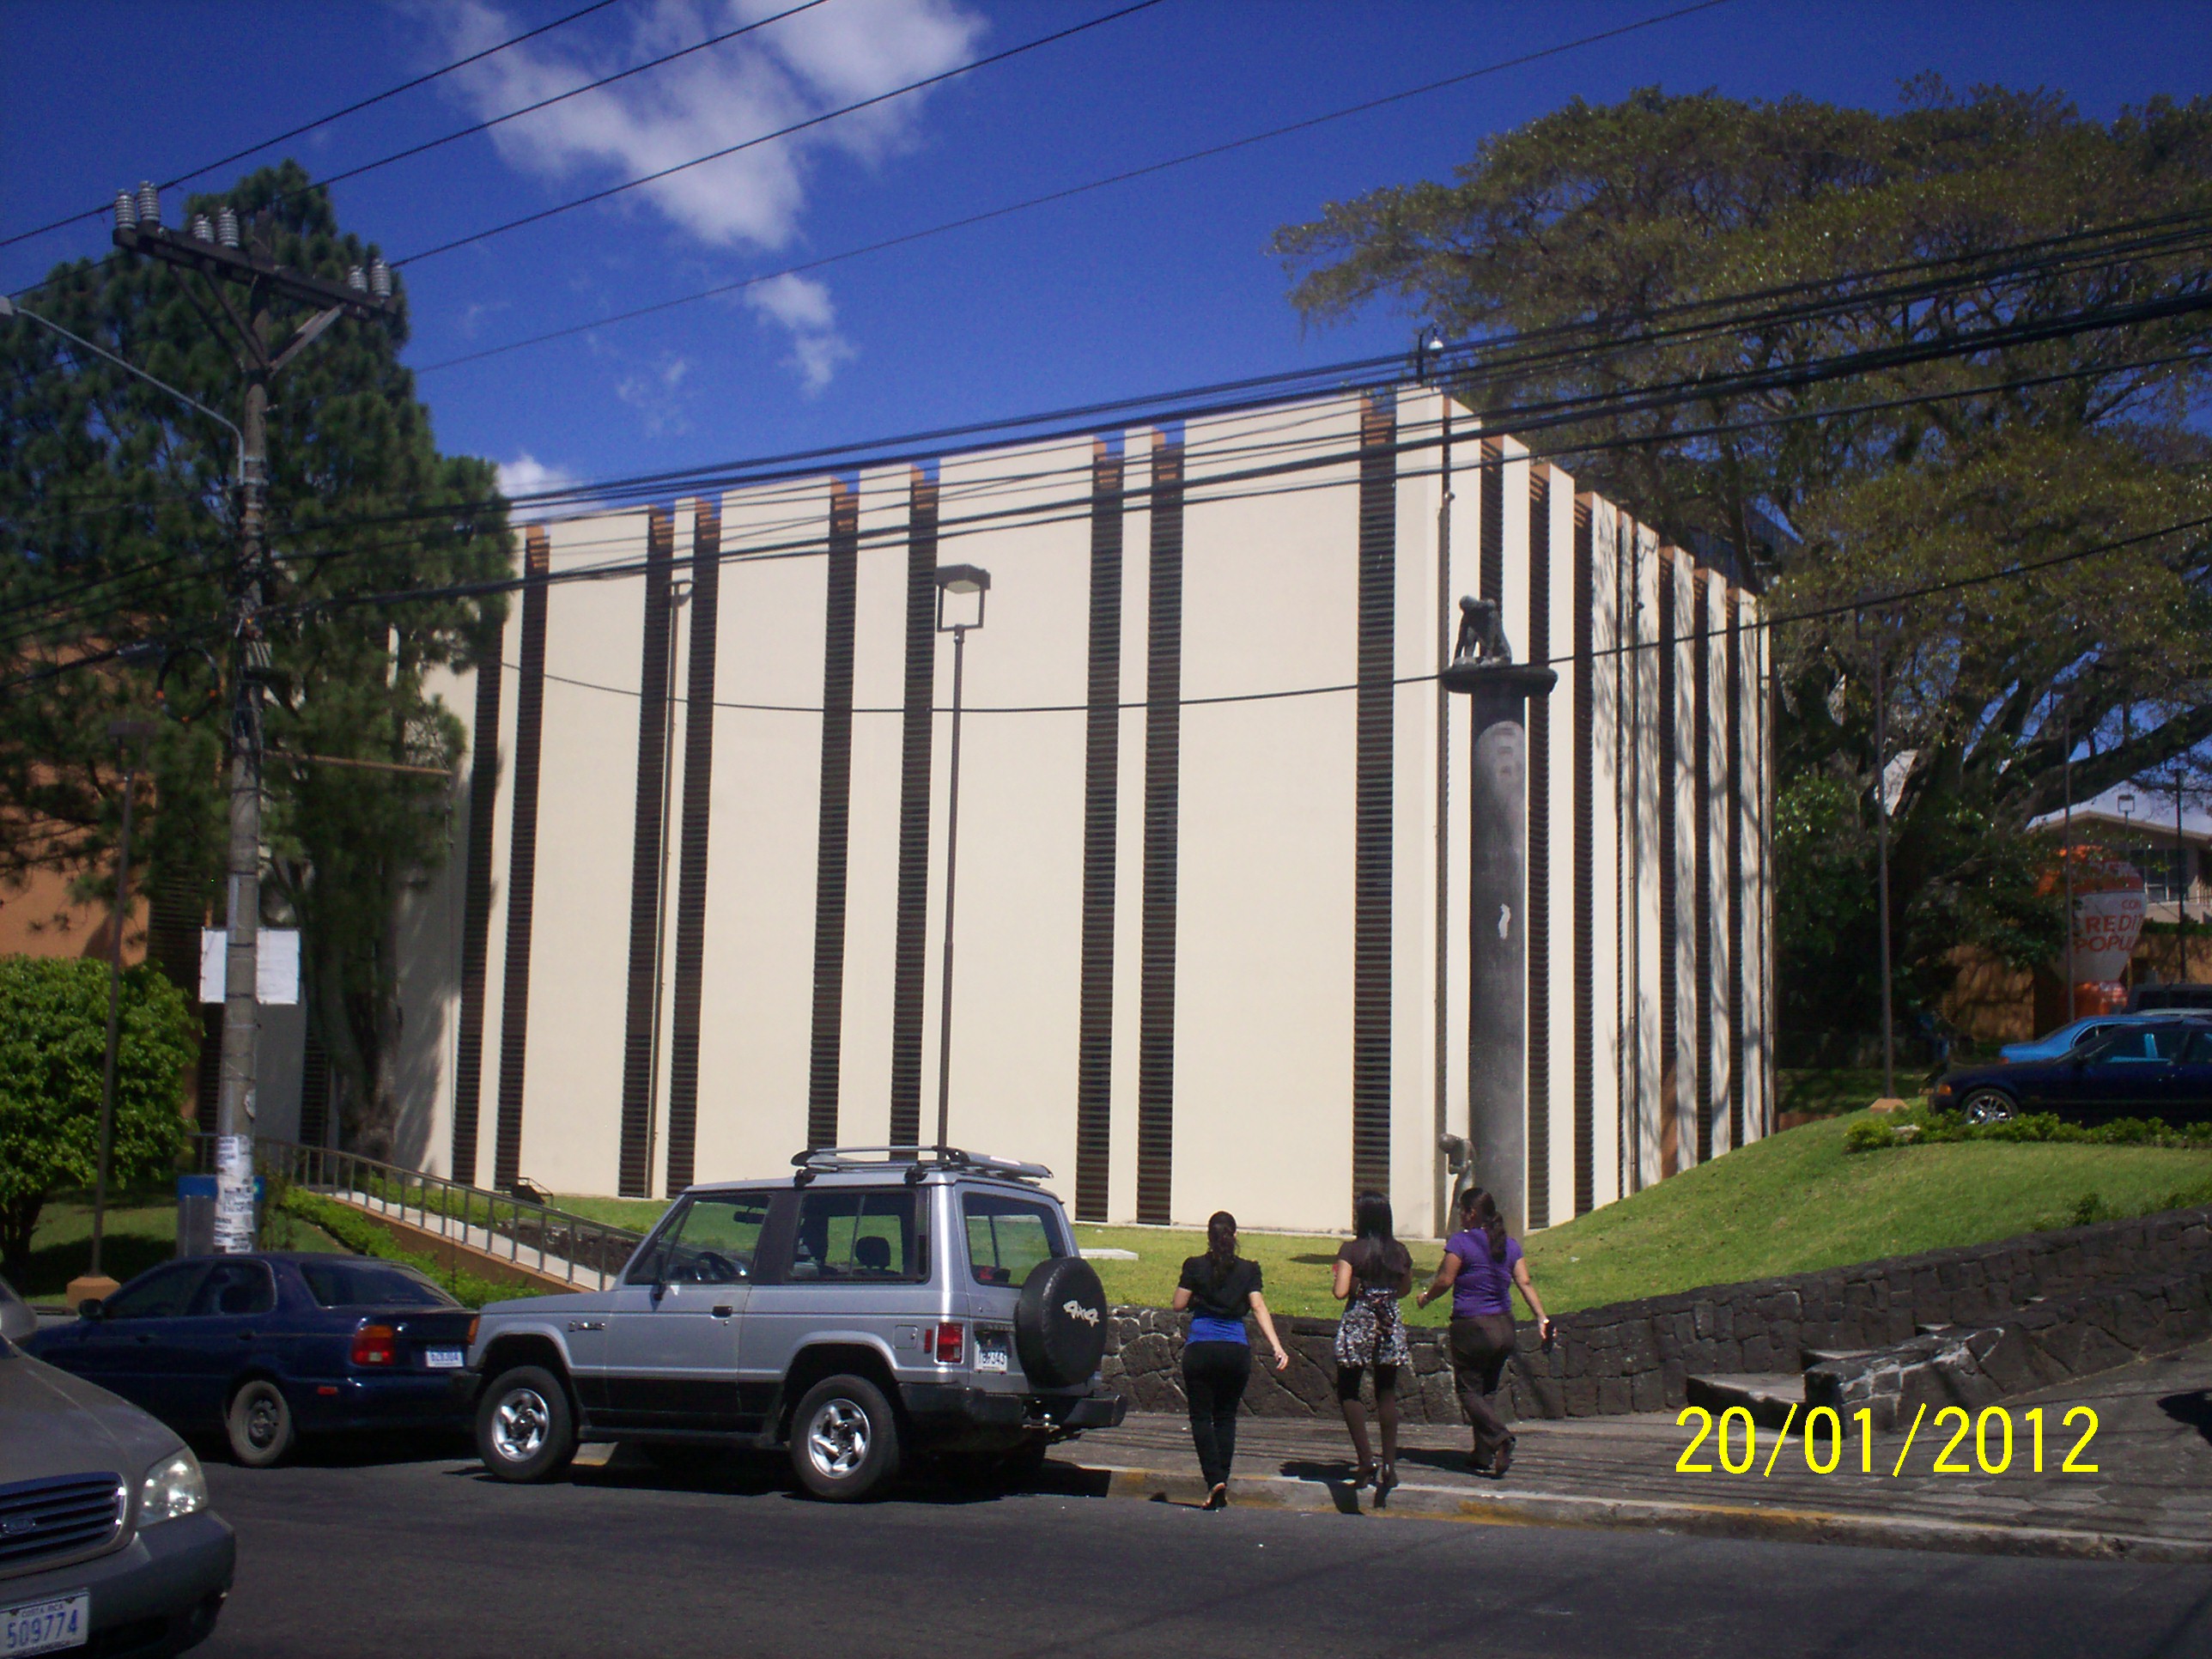 Foto: Tribunales de justicia - Alajuela, Costa Rica